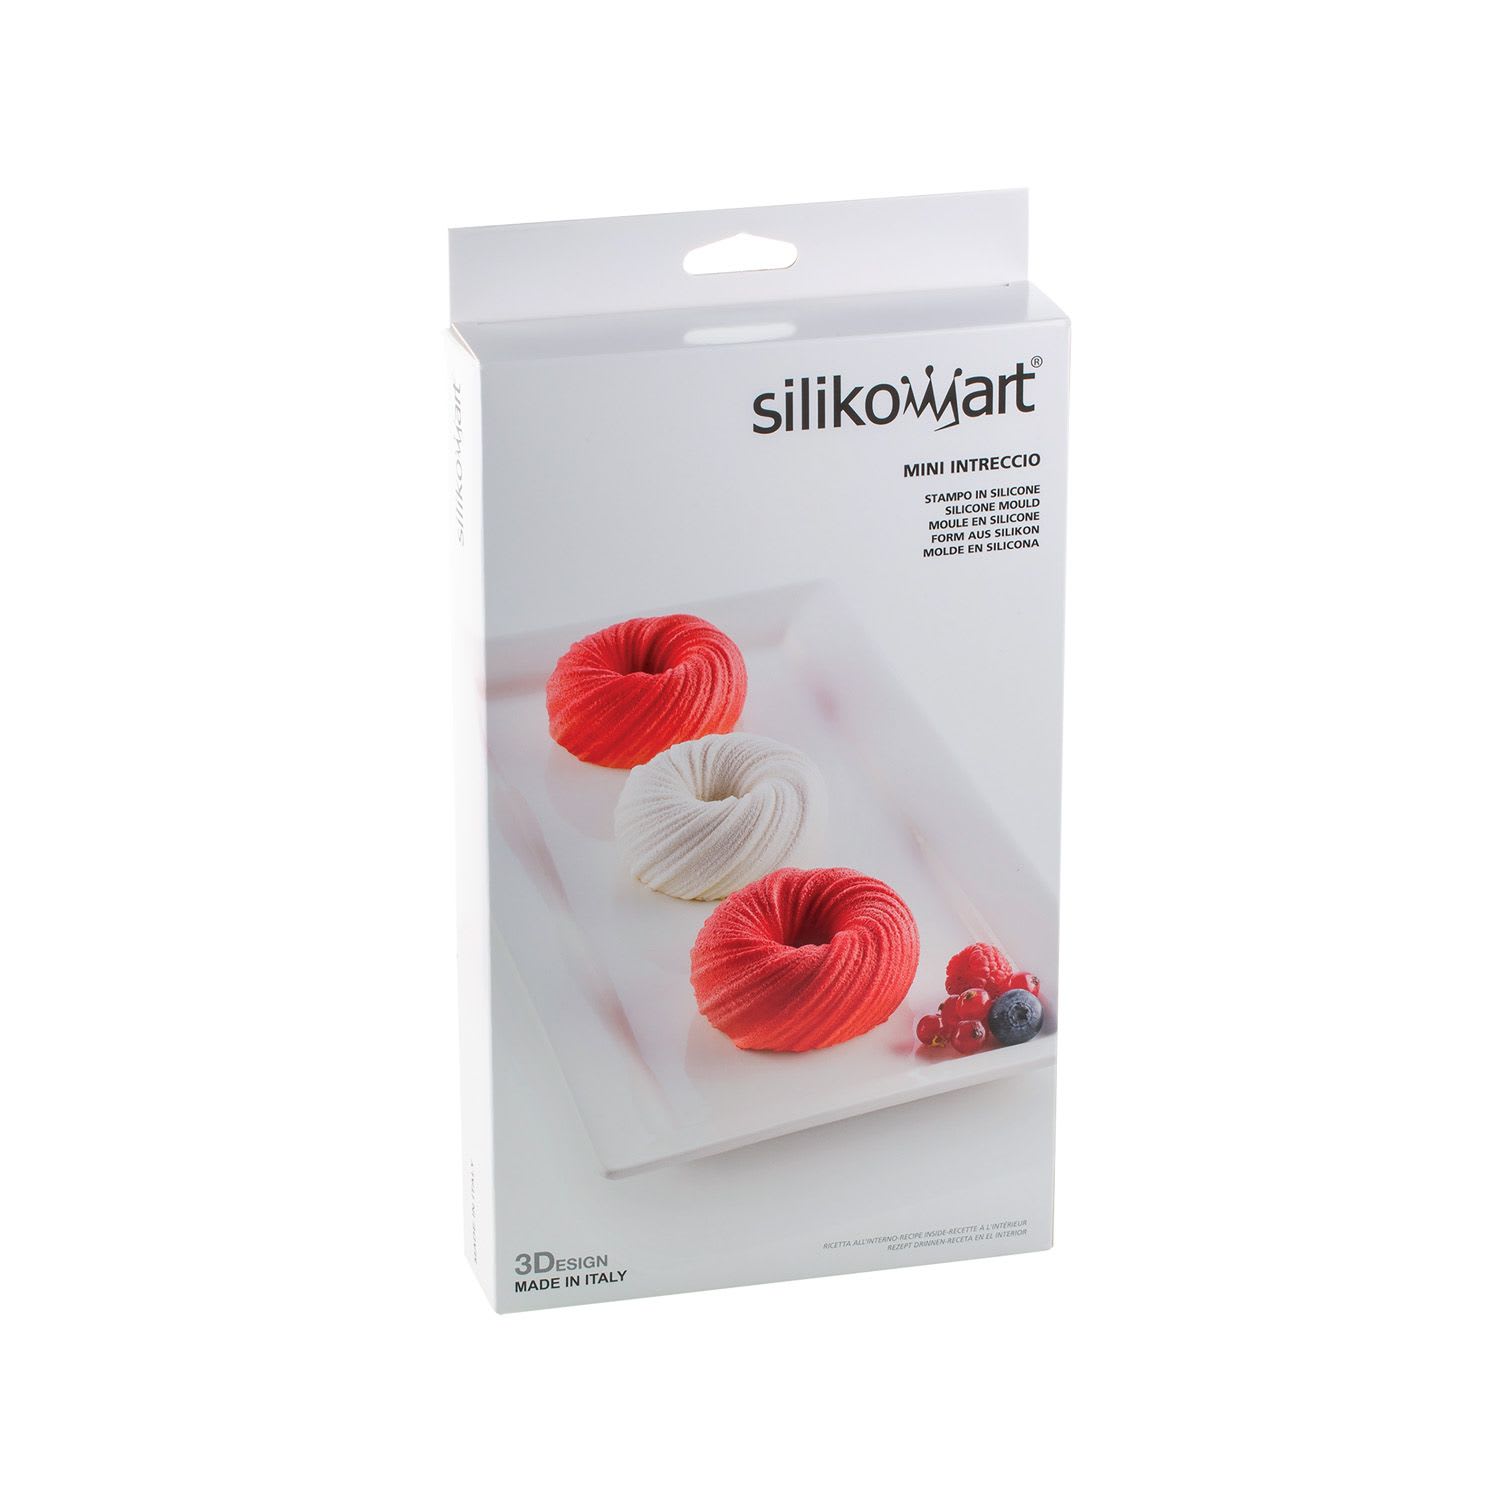 Moule en silicone 3D Intreccio - Silikomart